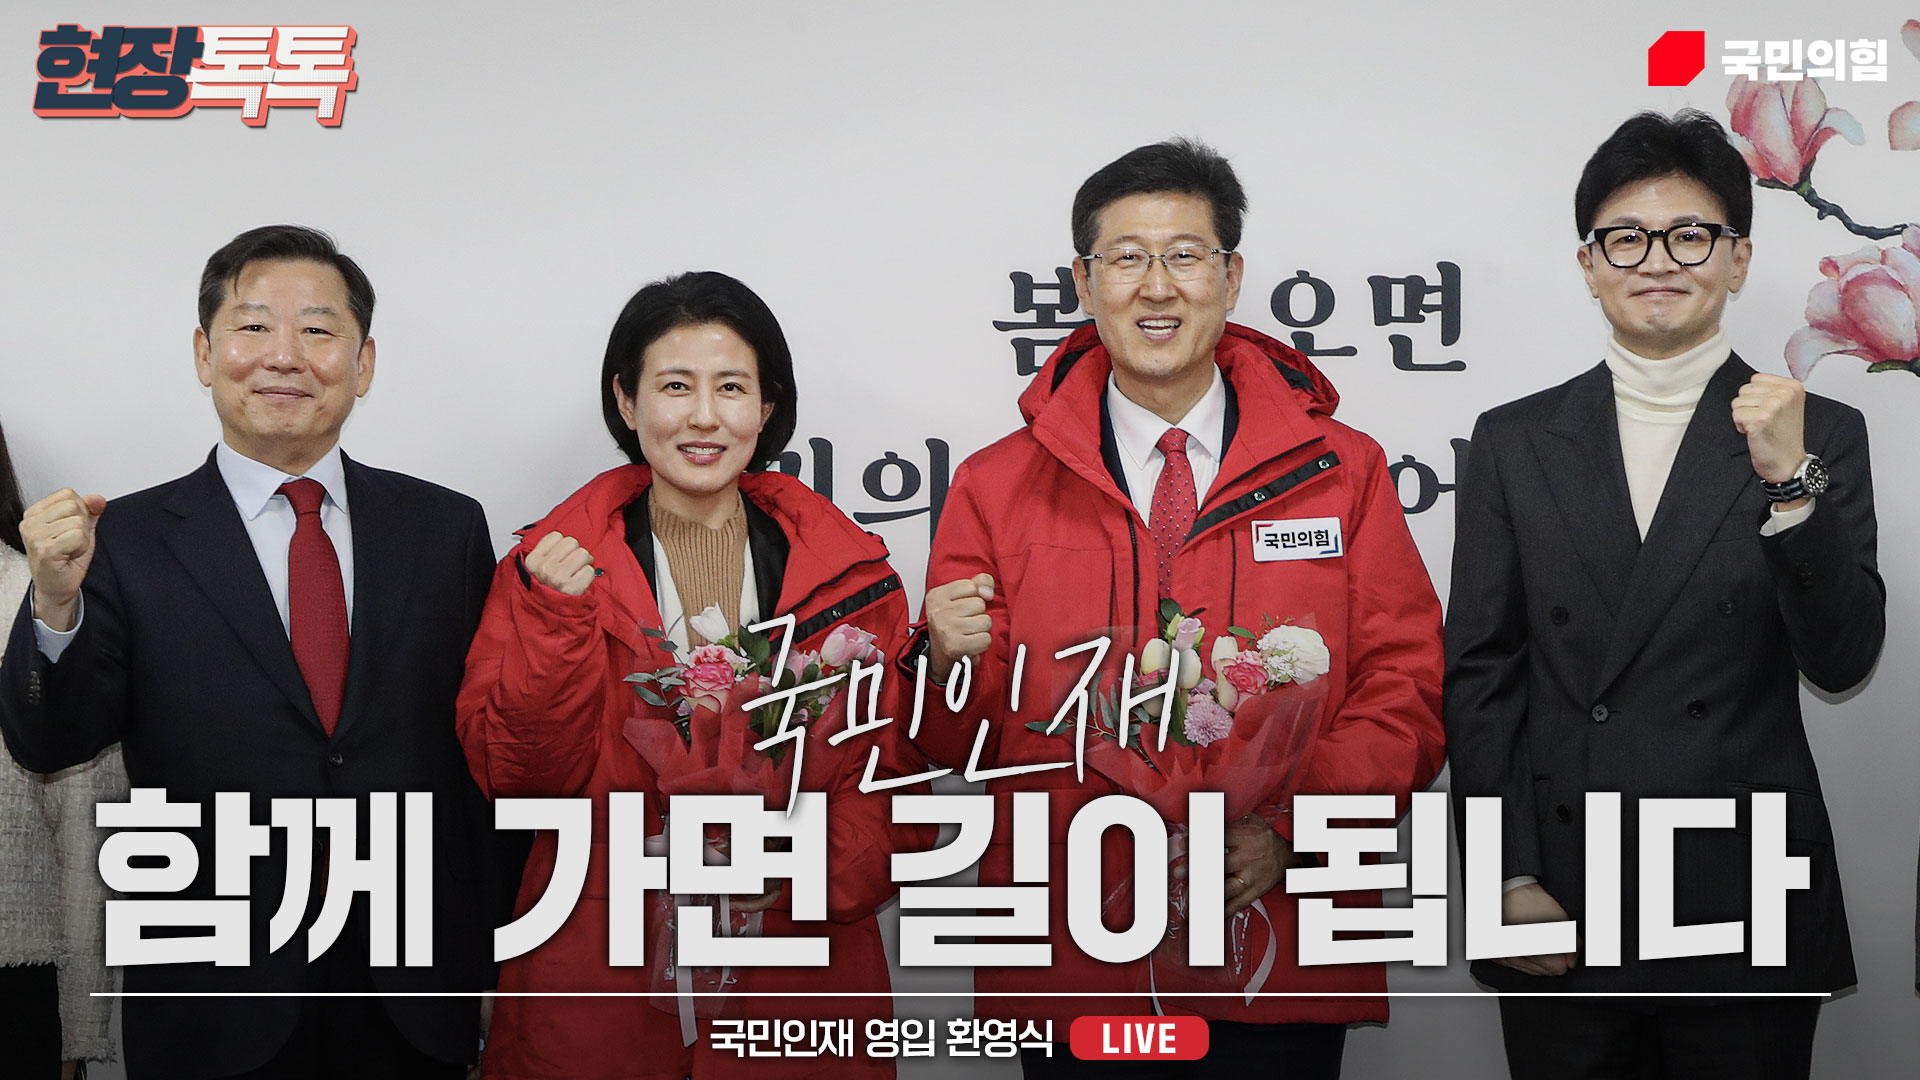 [Live] 2월 22일 국민인재 영입 환영식